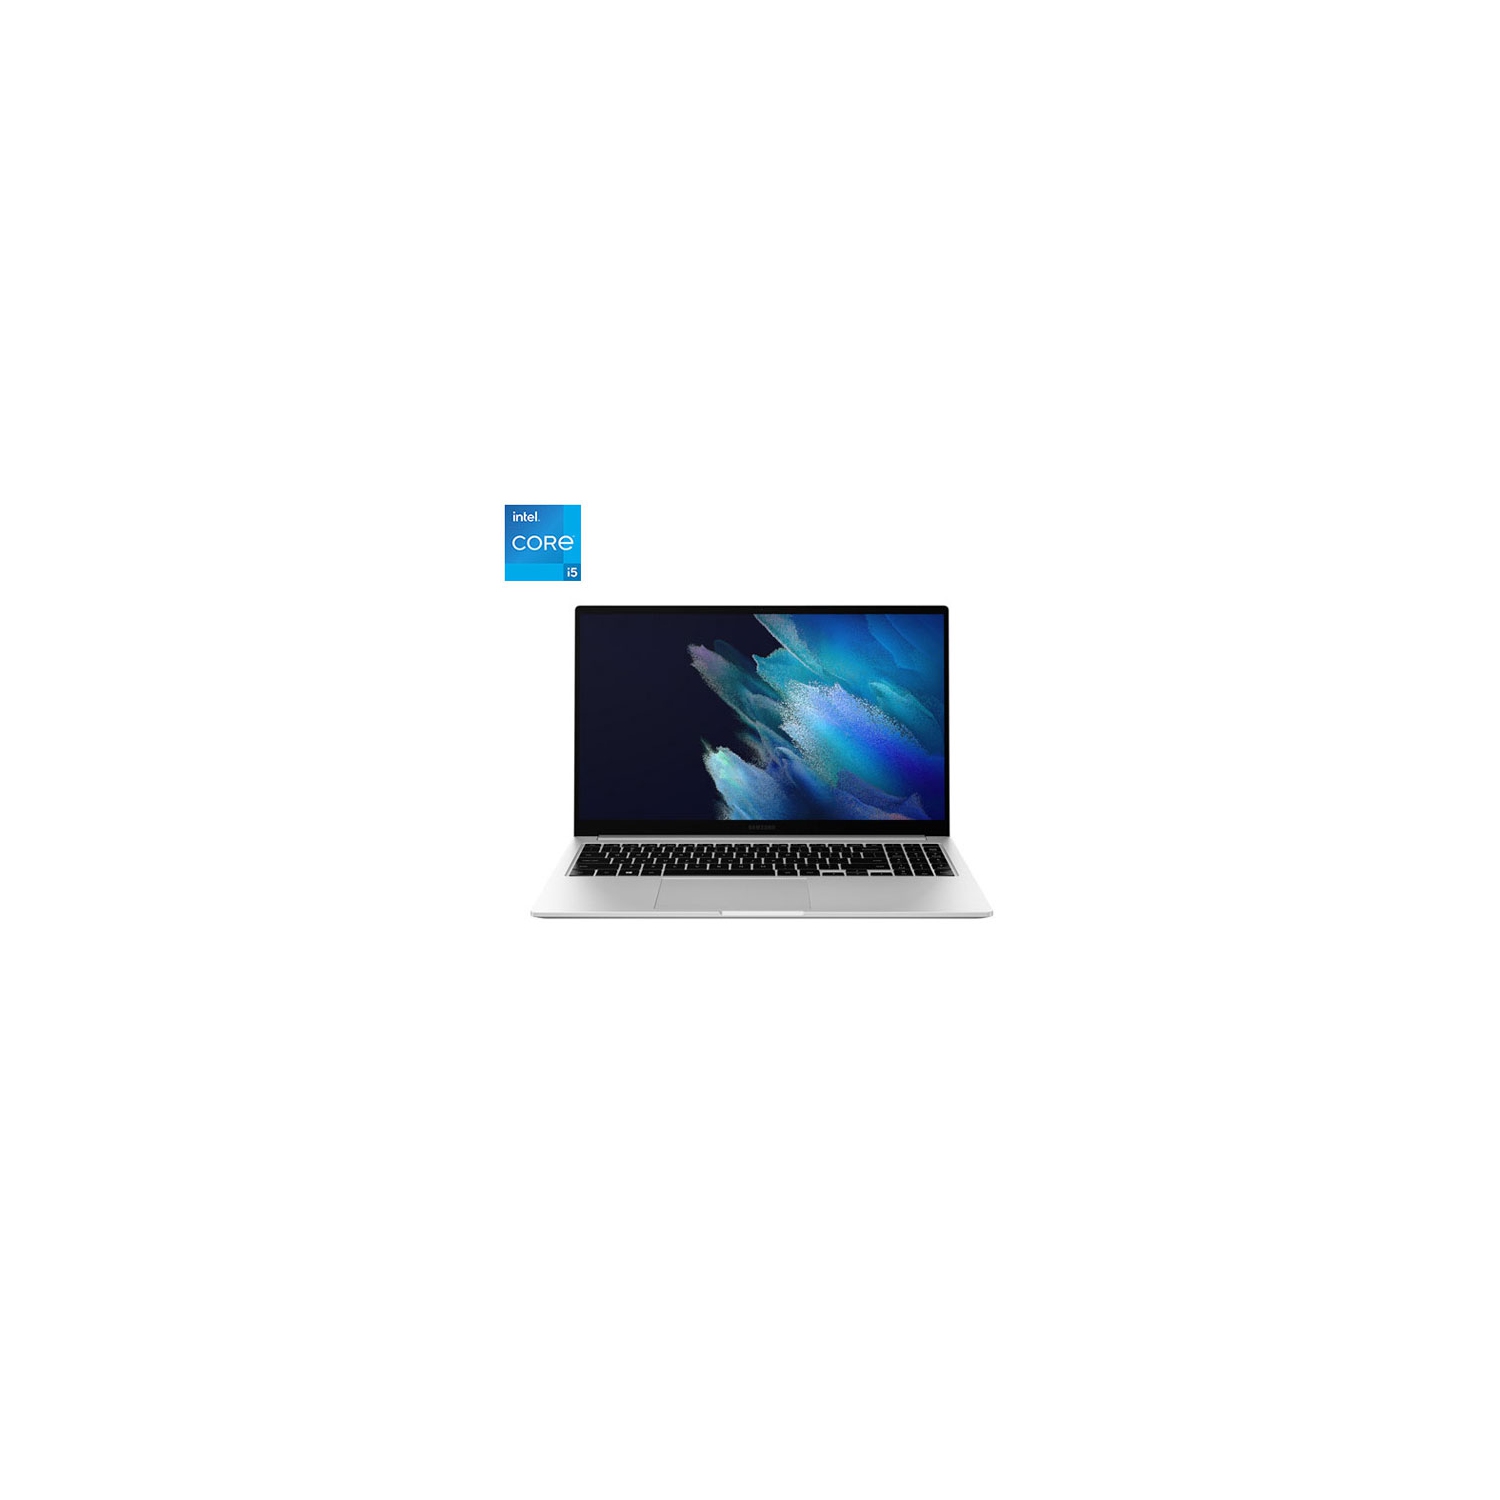 Samsung Galaxy Book 15.6" Laptop - Silver (Intel Core i5-1135G7/256GB SSD/8GB RAM/Windows 11) - Open Box